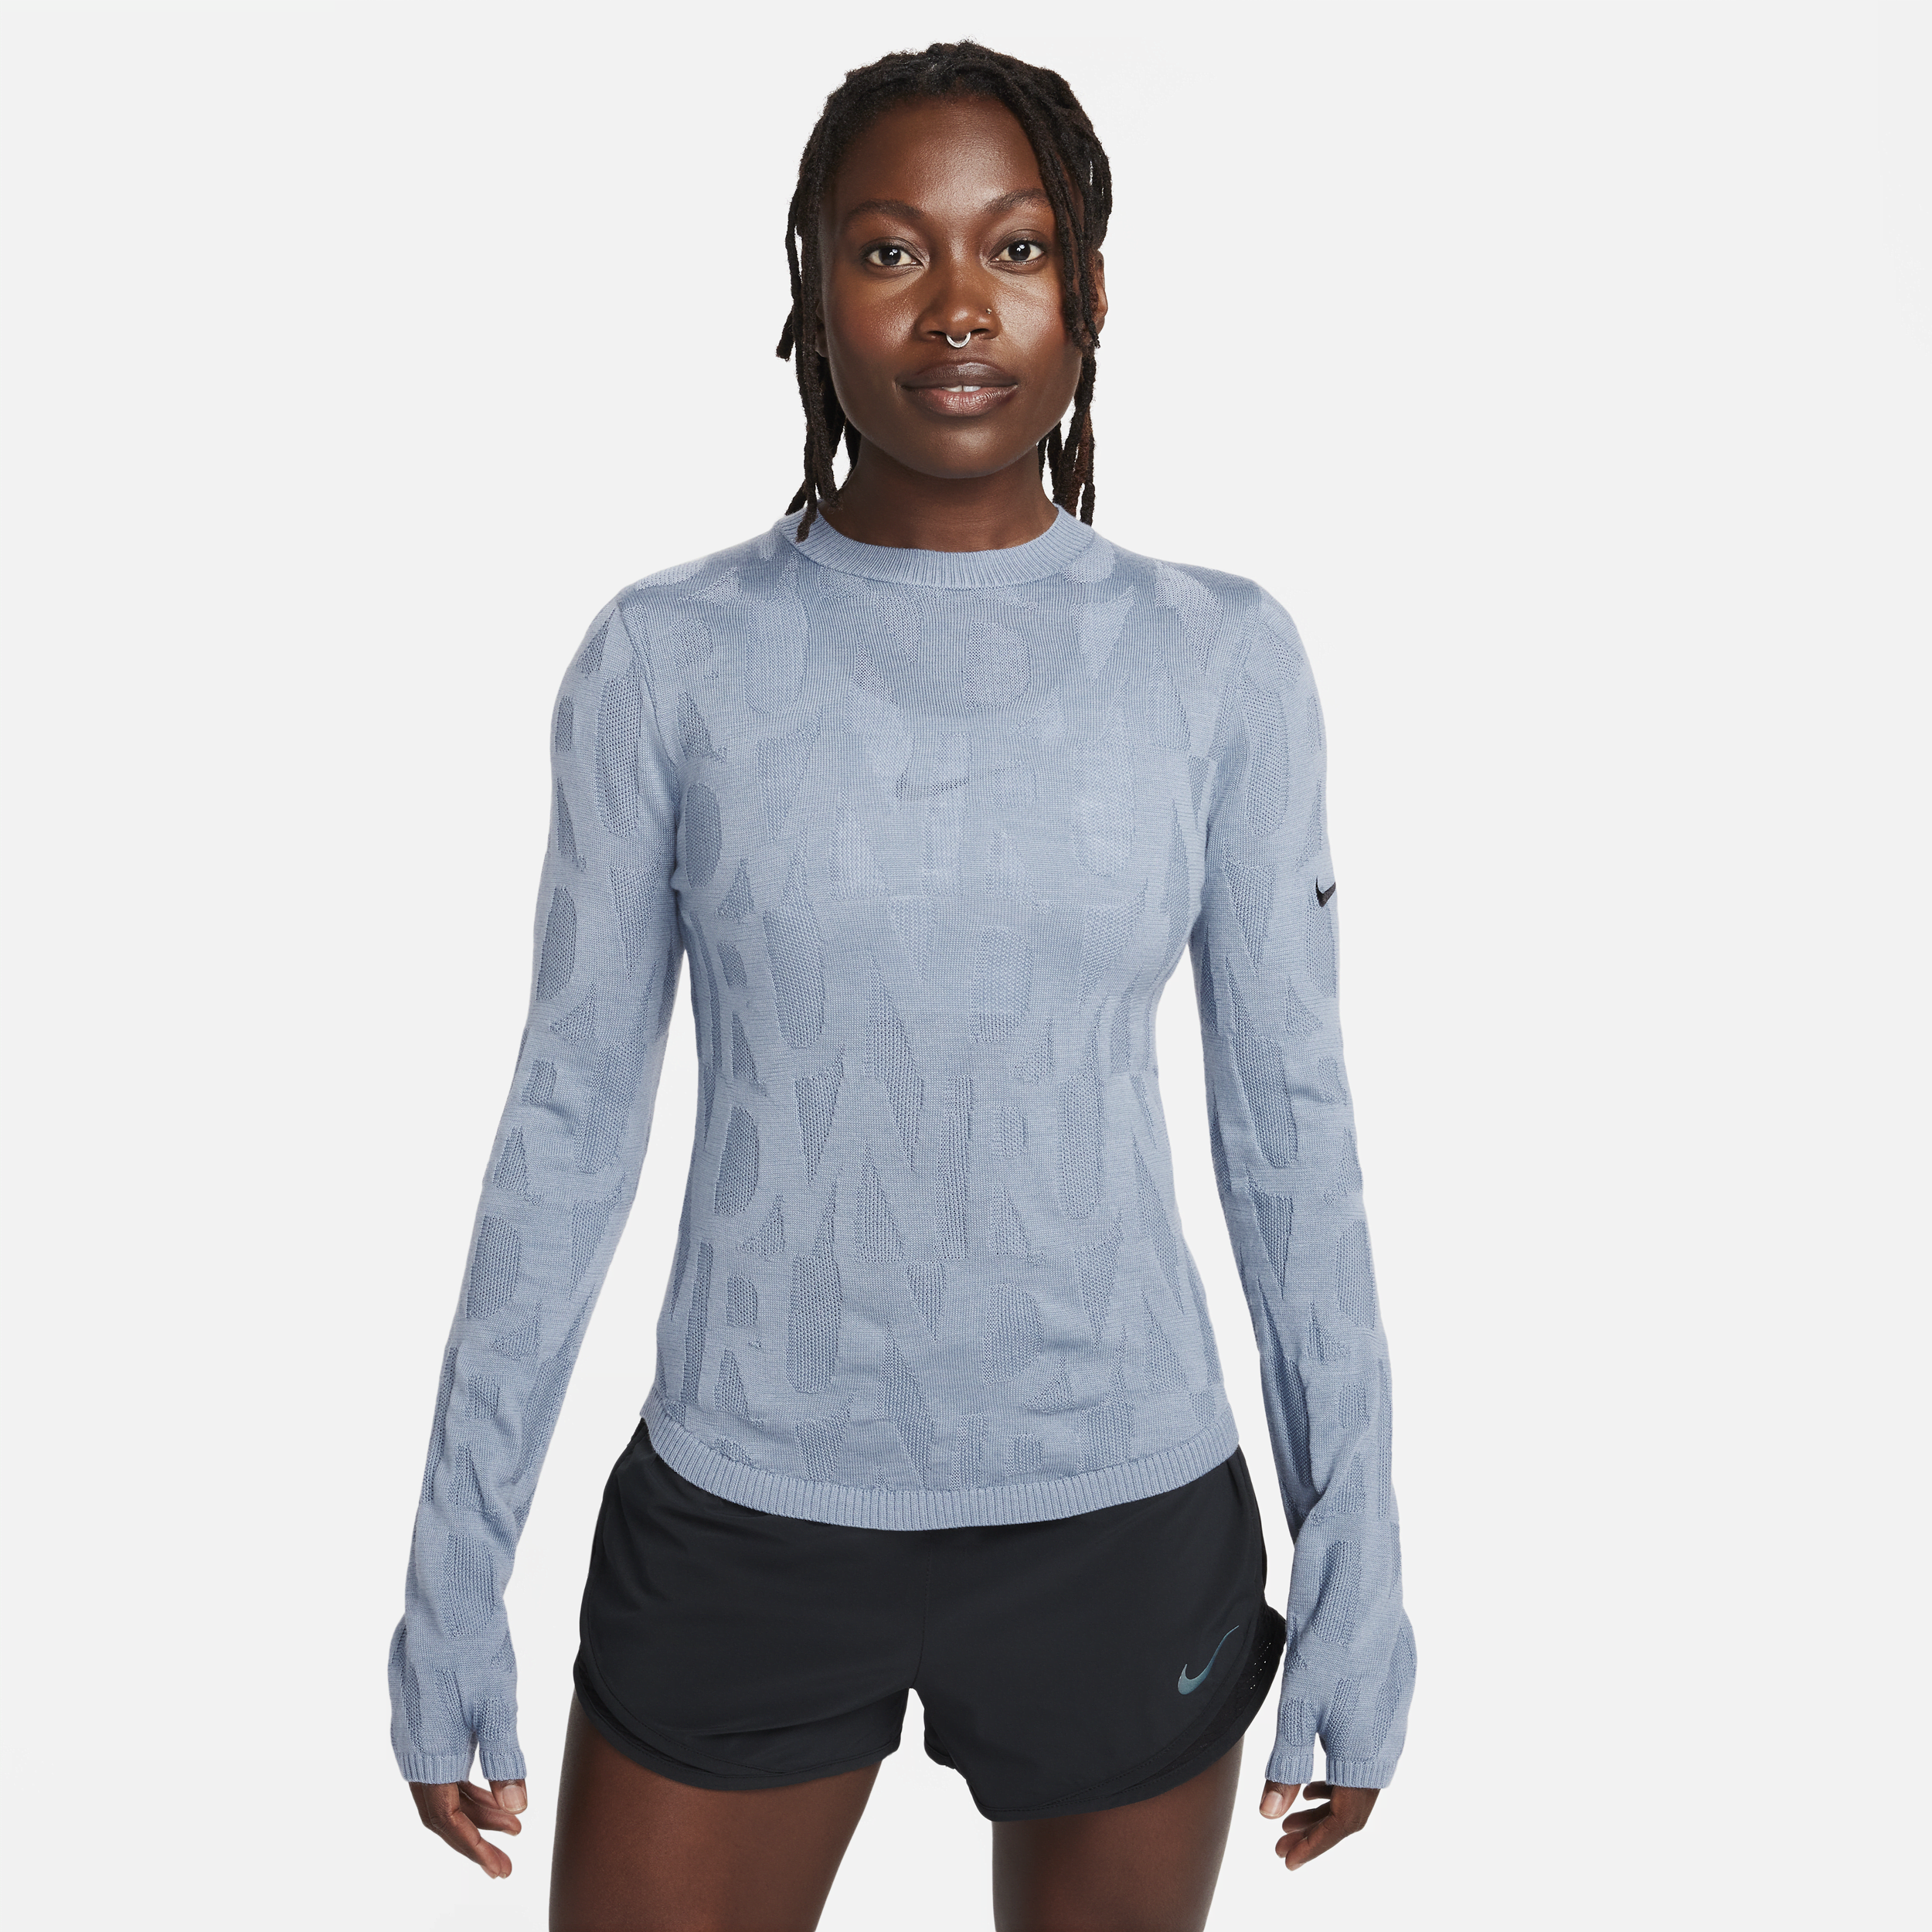 Capo midlayer da running Nike Running Division – Donna - Blu